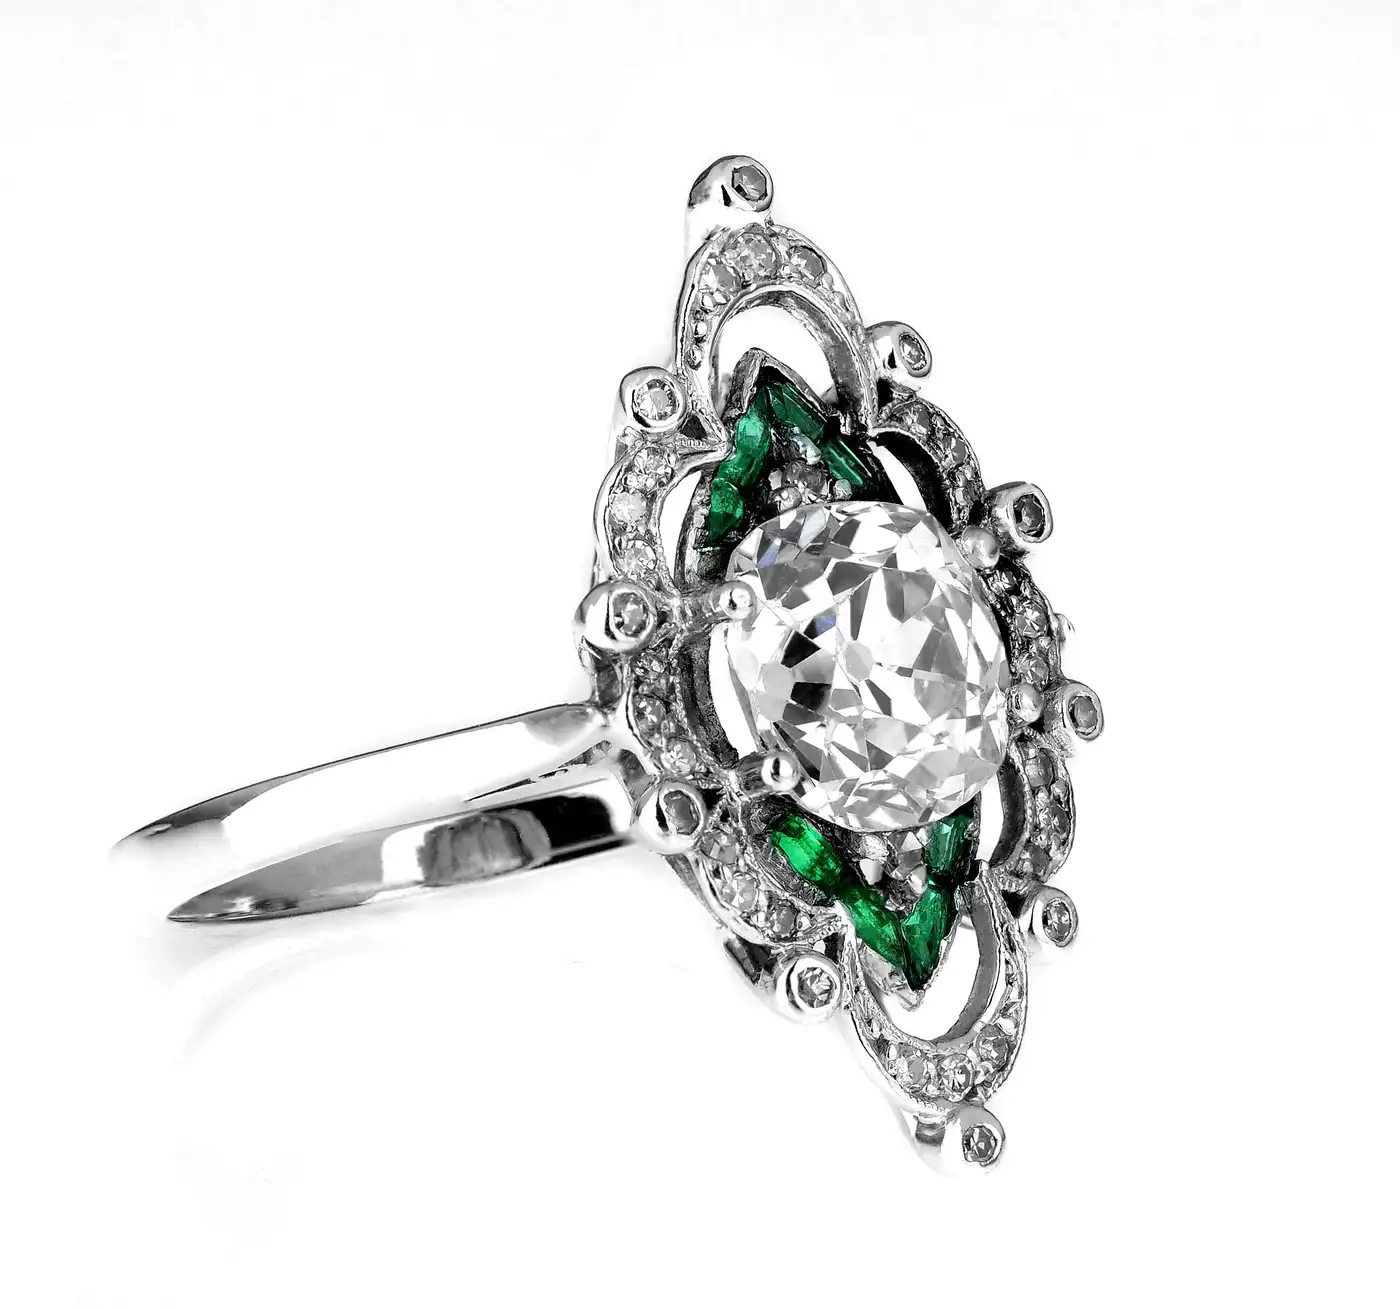 Antique-Edwardian-Old-Cut-Cushion-Diamond-2.0cts-Emerald-Ring-in-Platinum-6.webp